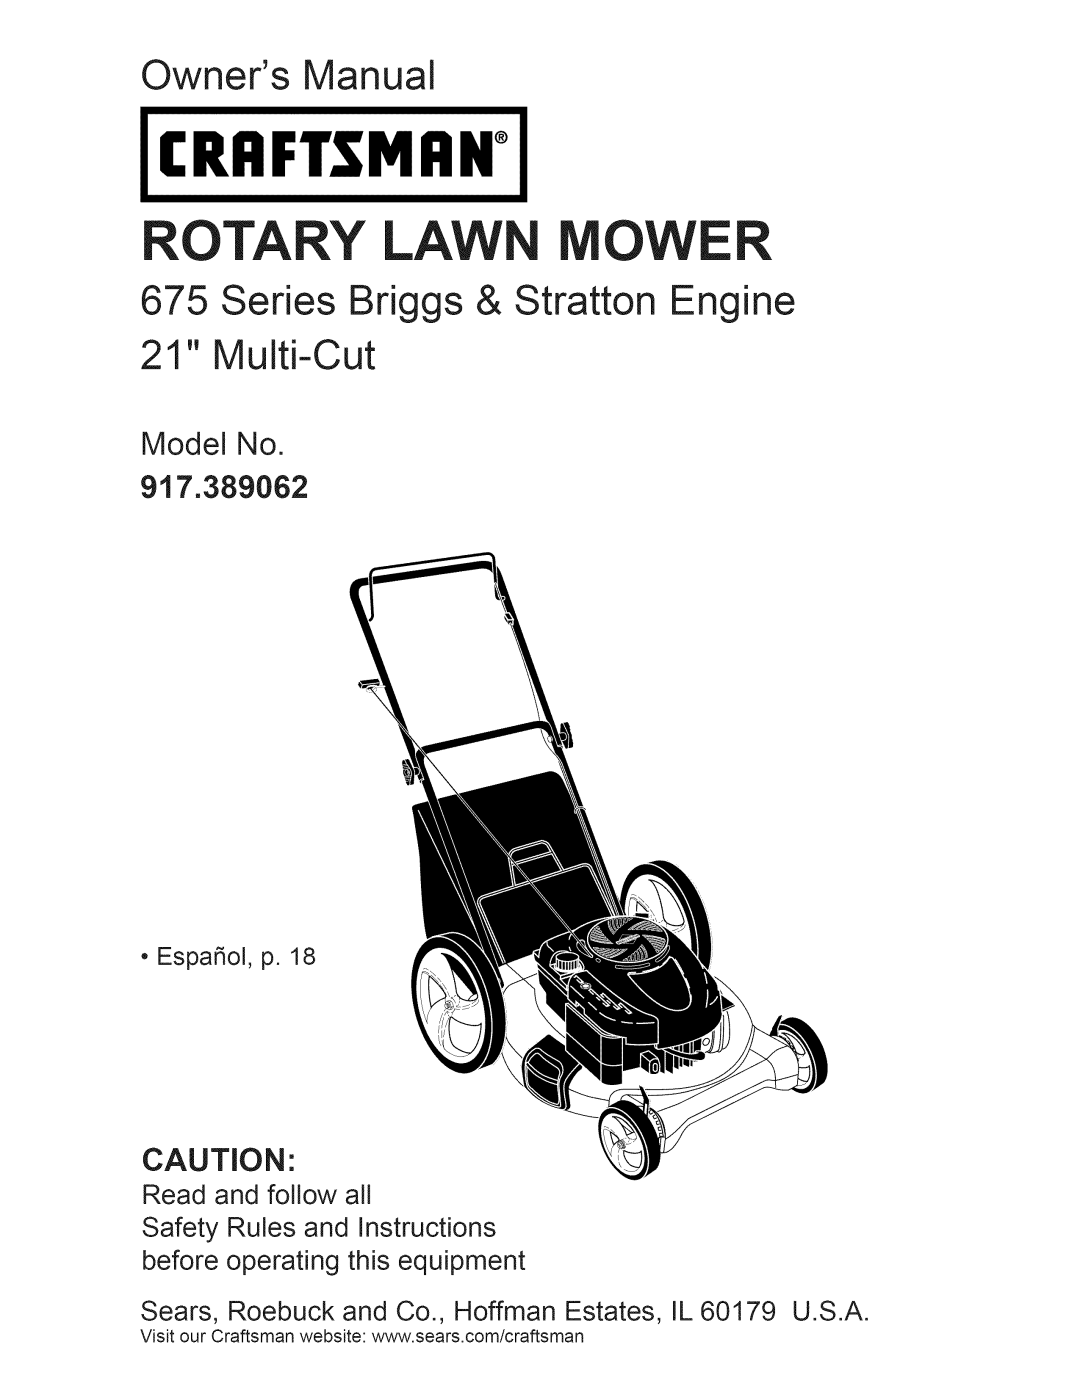 Craftsman owner manual Model No 917.389062, Craftsman, Rotary Lawn Mower, Owners Manual 